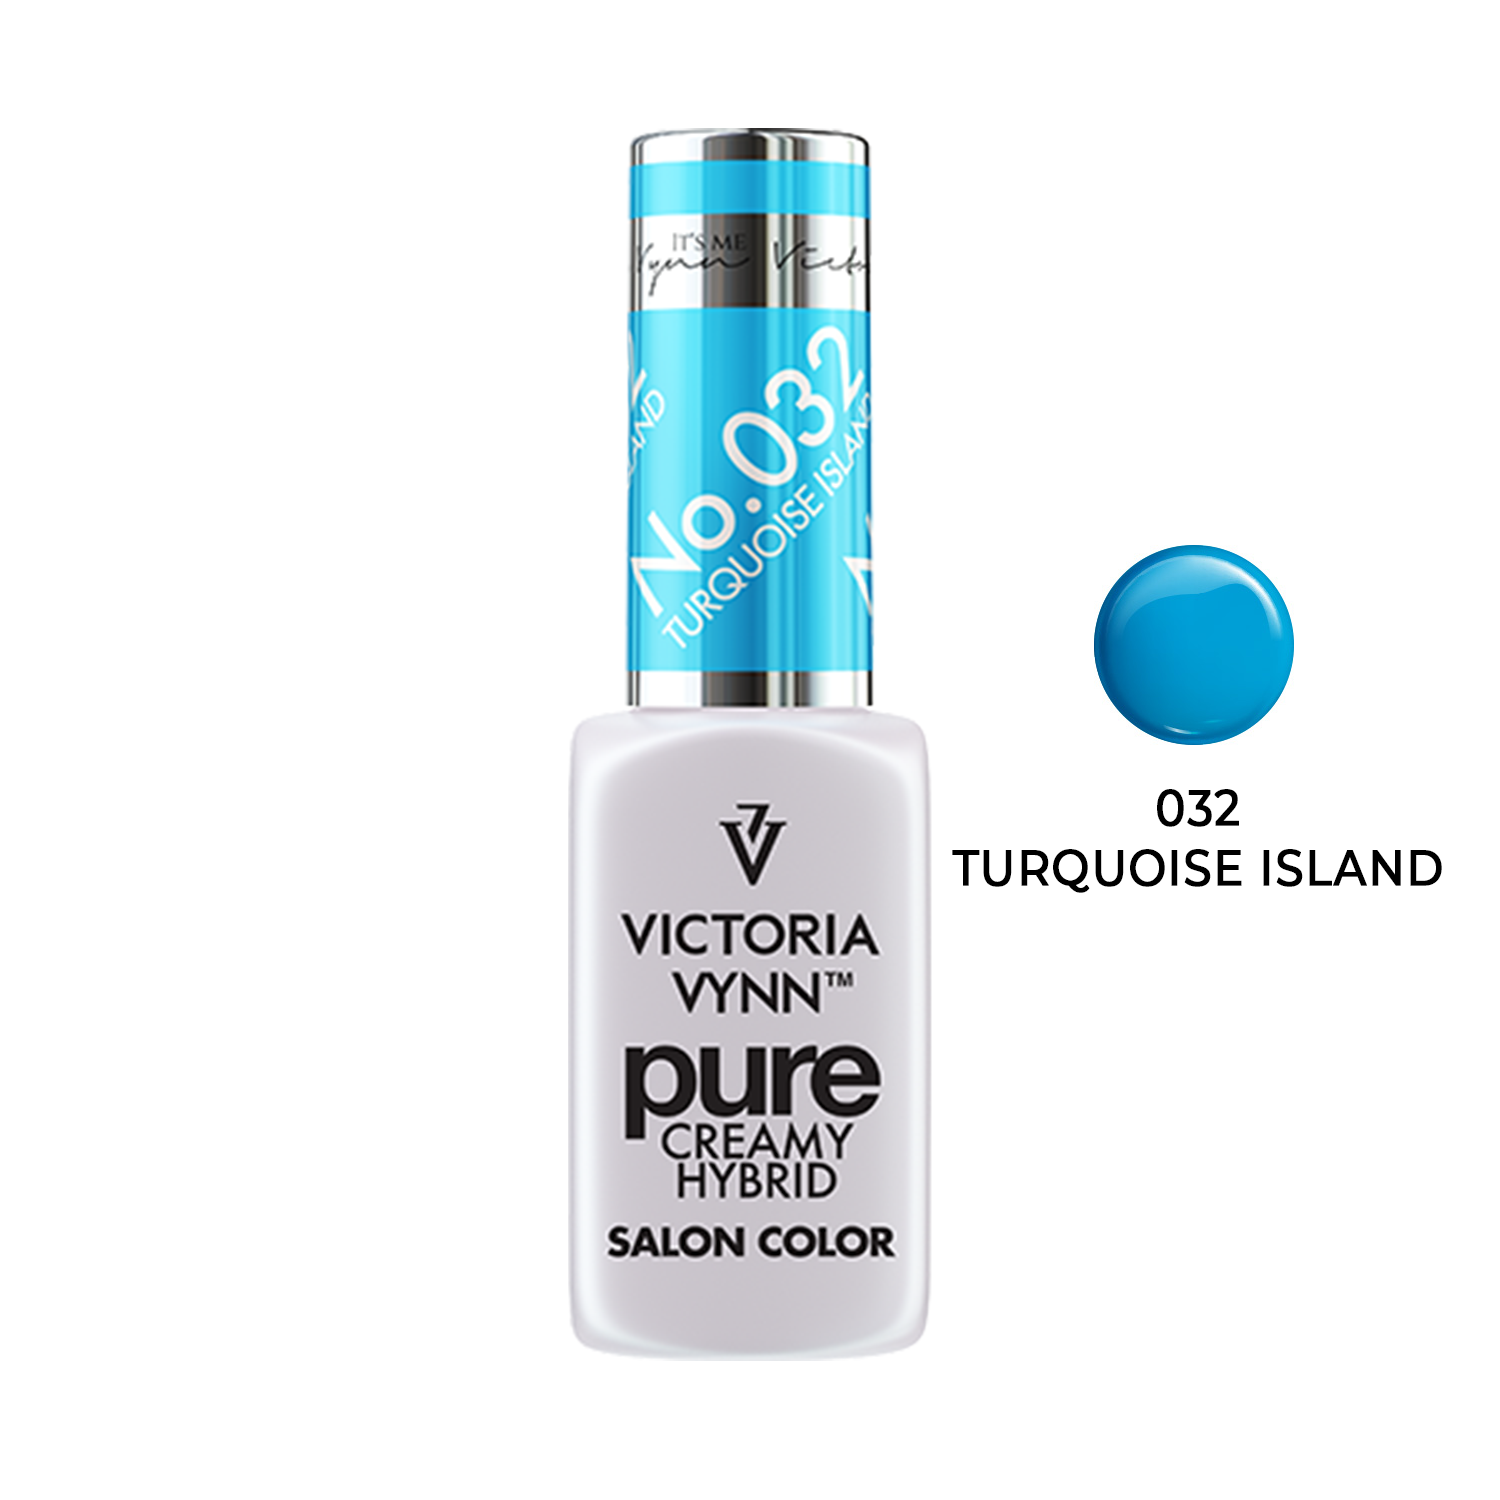 Pure Creamy Hybrid Turquoise Island 032 8ml